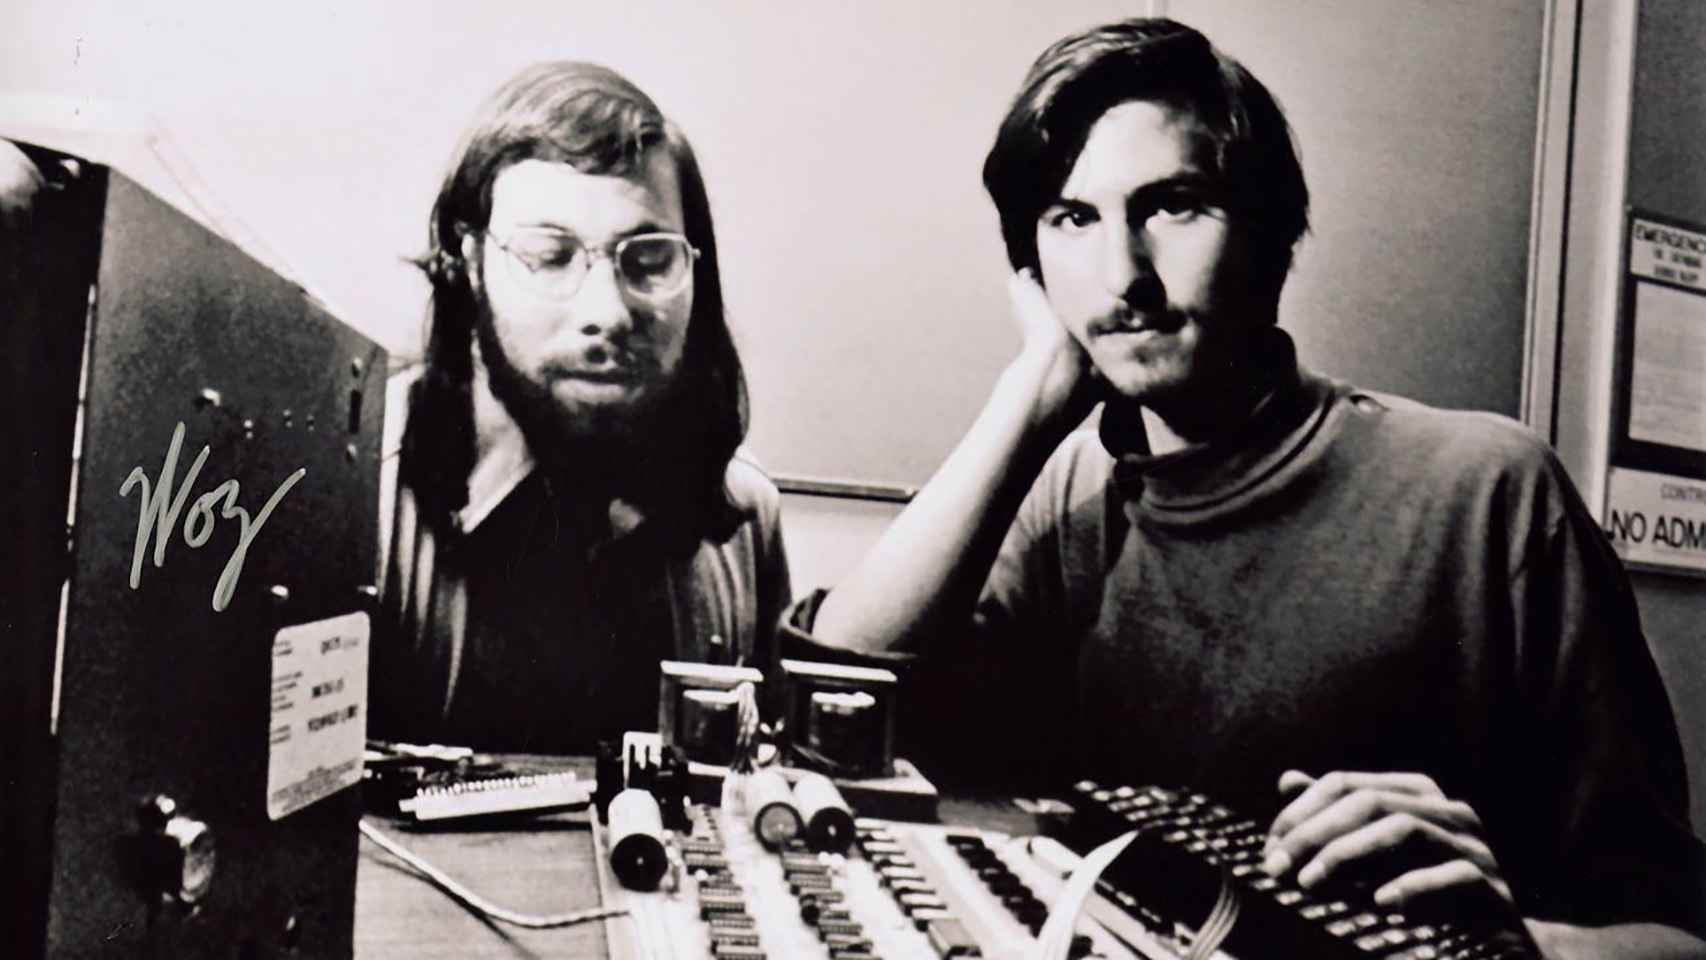 Steve Jobs con Steve Wozniak